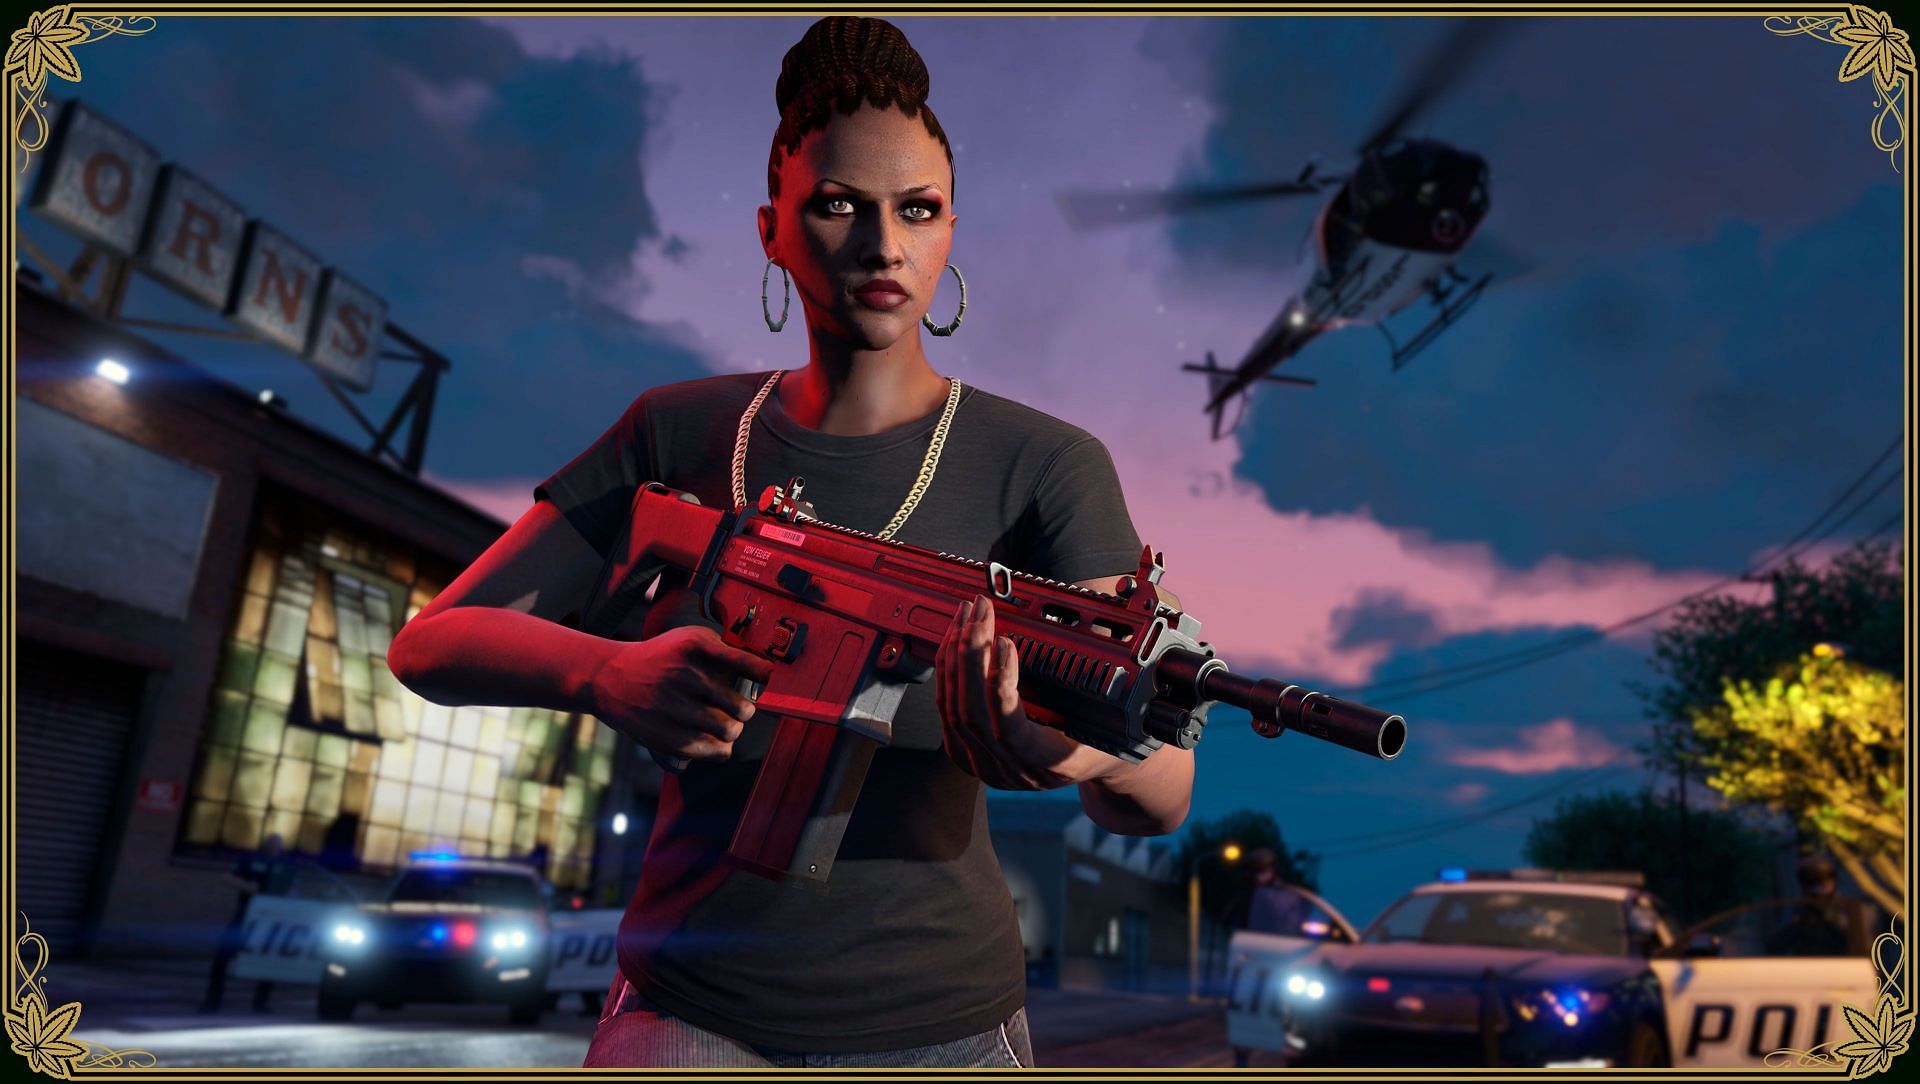 The Heavy Rifle in GTA Online (Image via Rockstar Games)